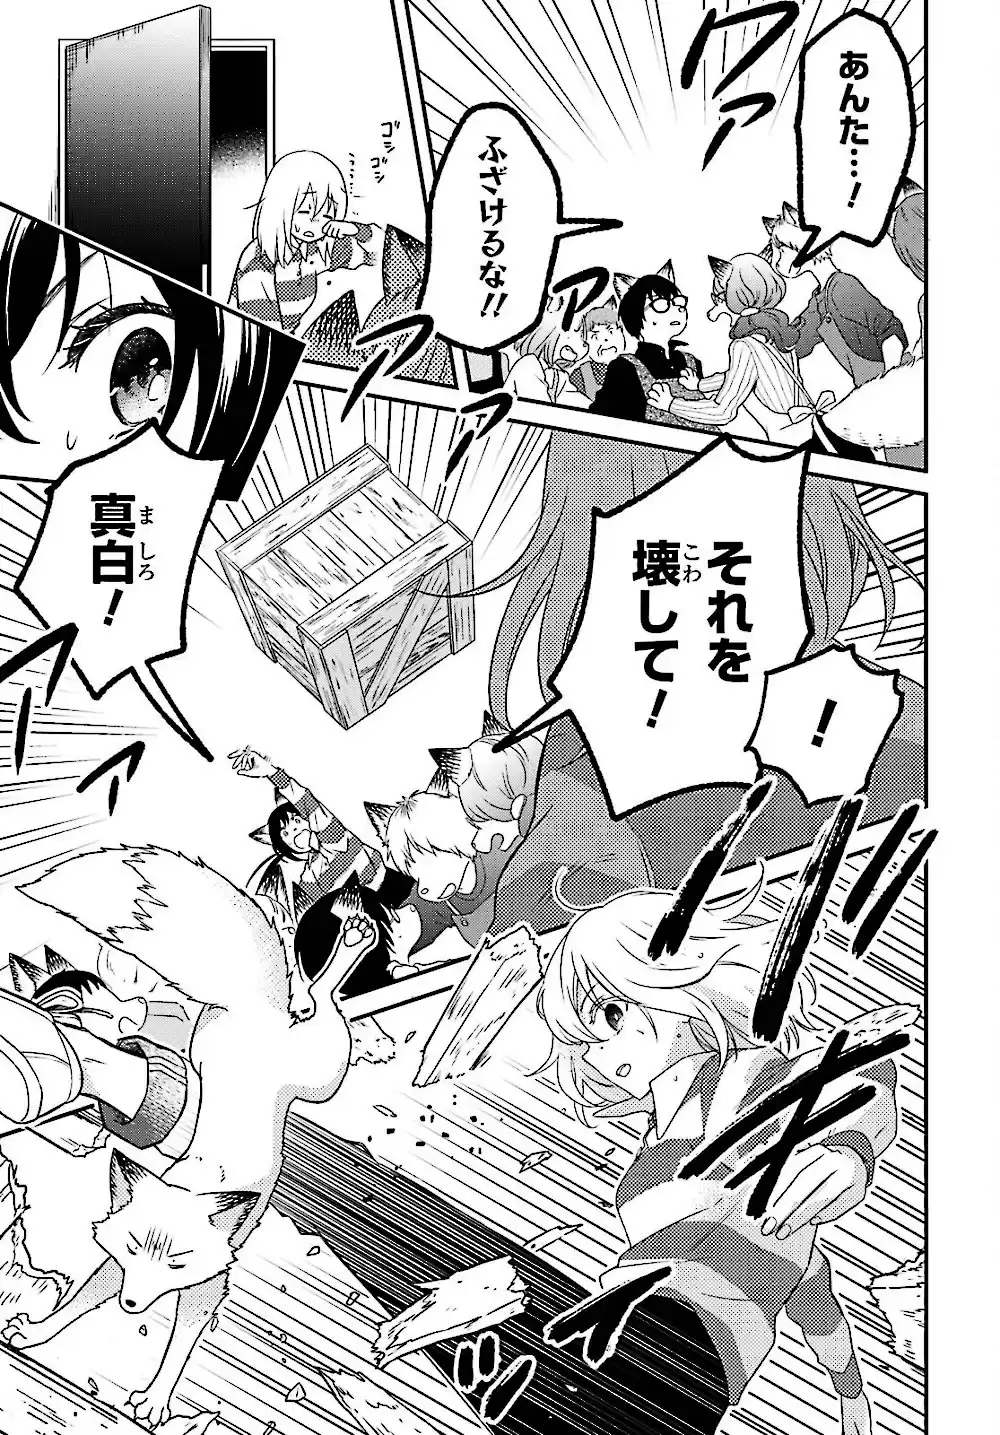 32 Manga E6is